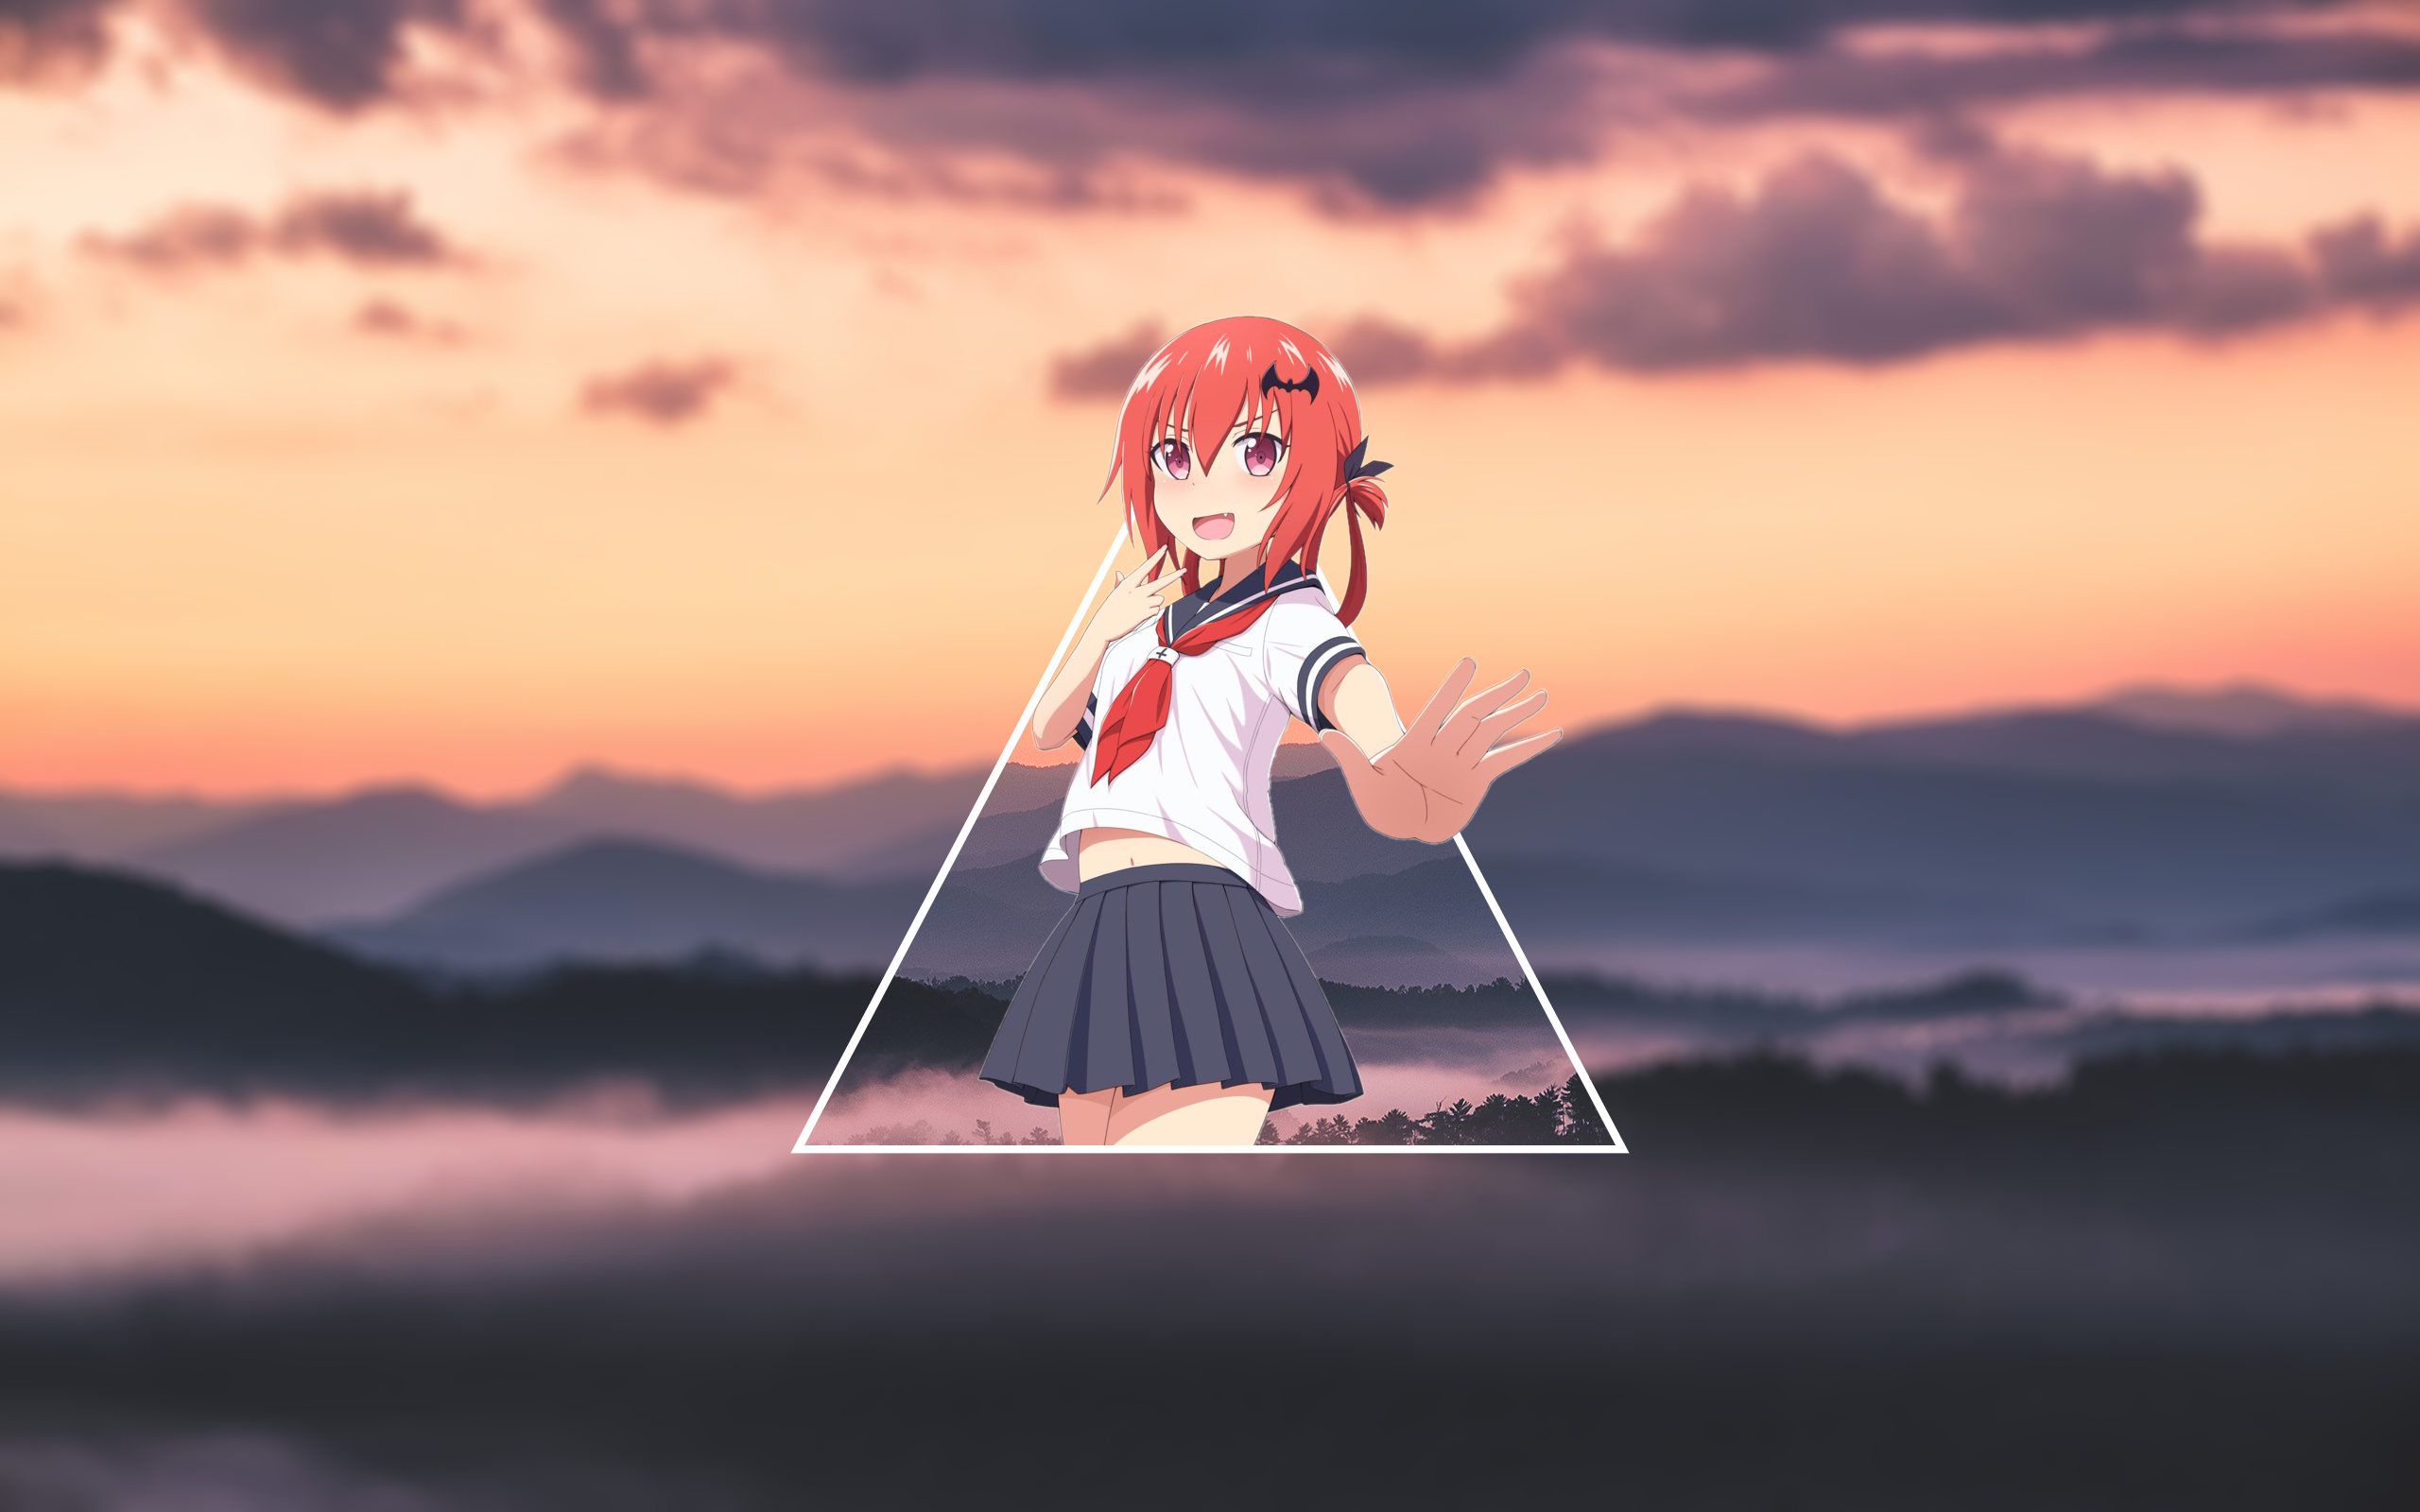 Anime 2560x1600 Satanichia McDowell Kurumizawa Gabriel Dropout picture-in-picture anime girls school uniform landscape mountains anime NyaRoon